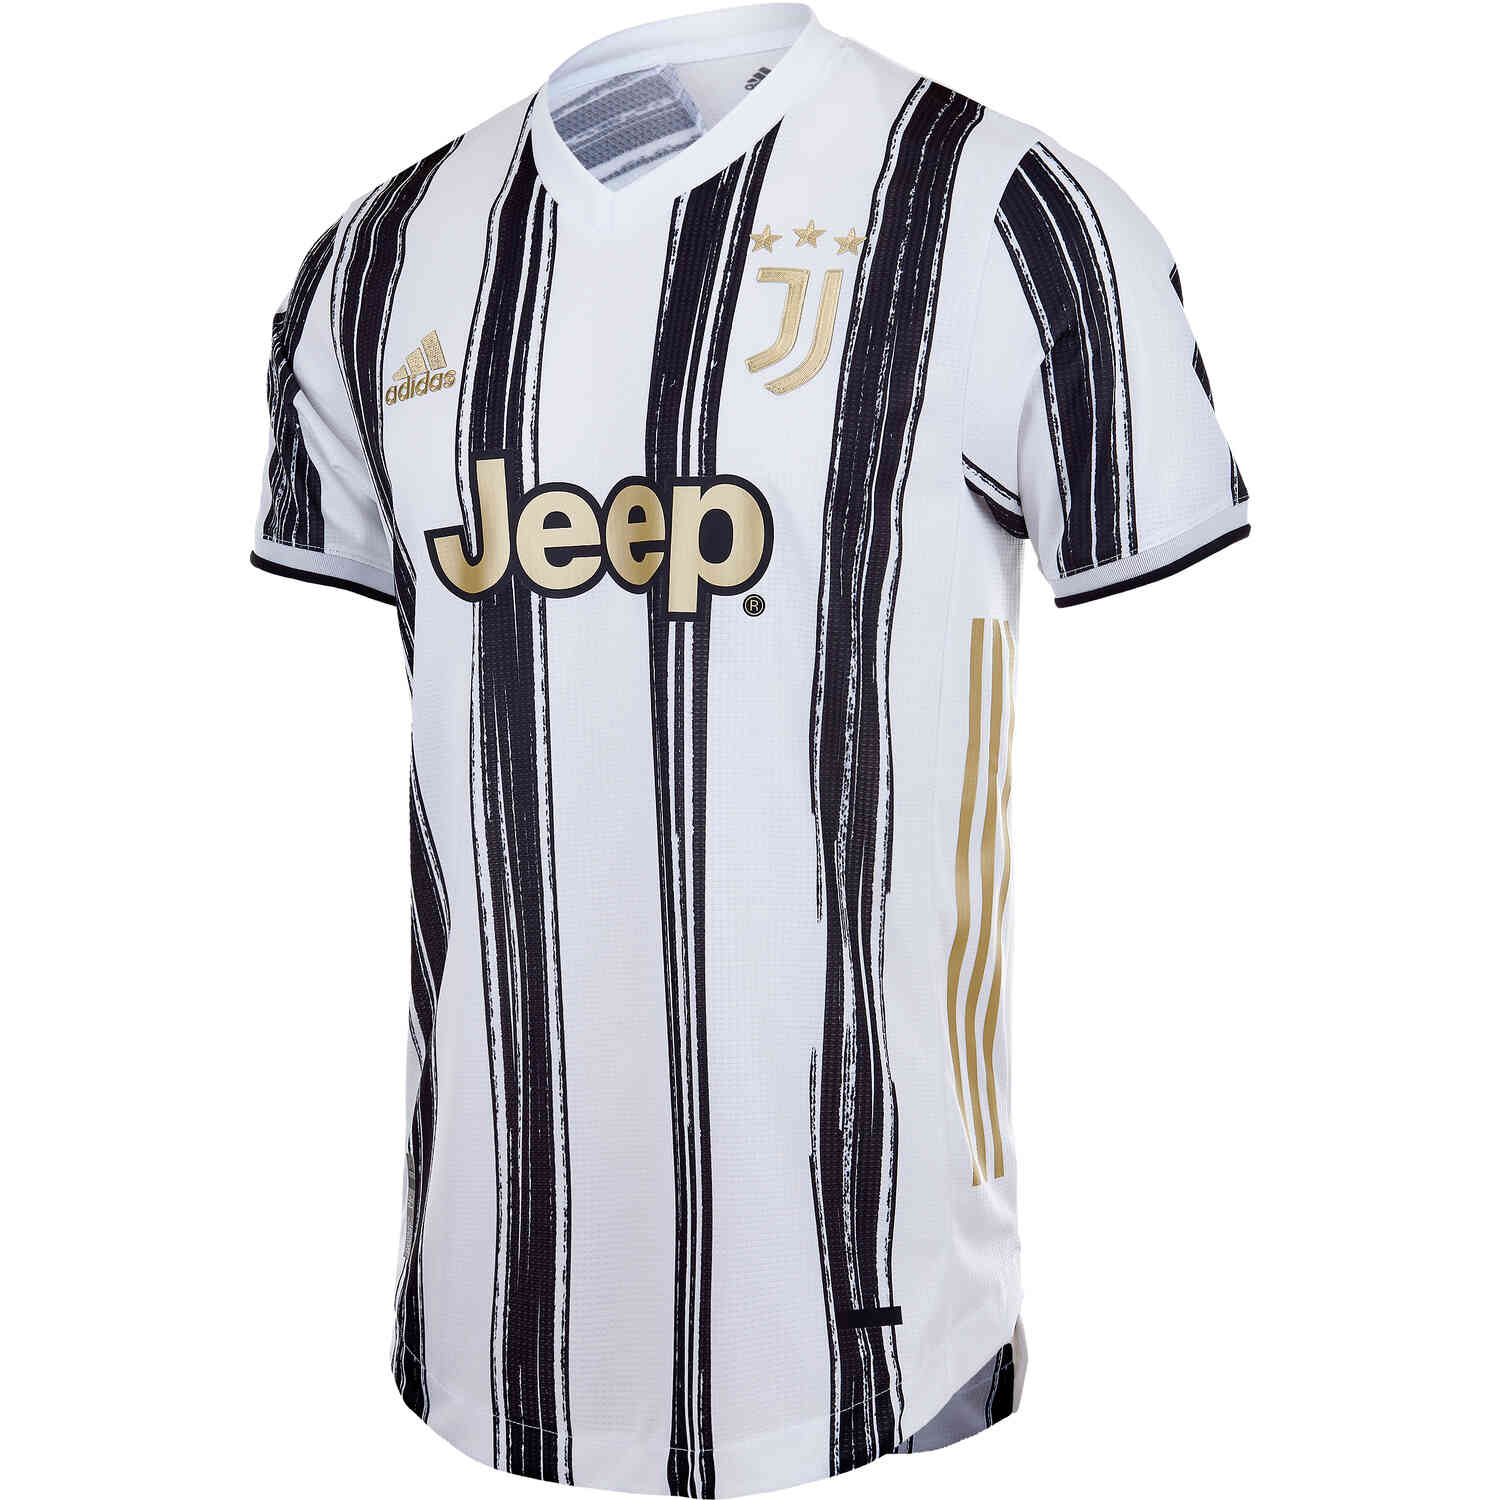 2020/21 adidas Juventus Home Authentic Jersey - SoccerPro